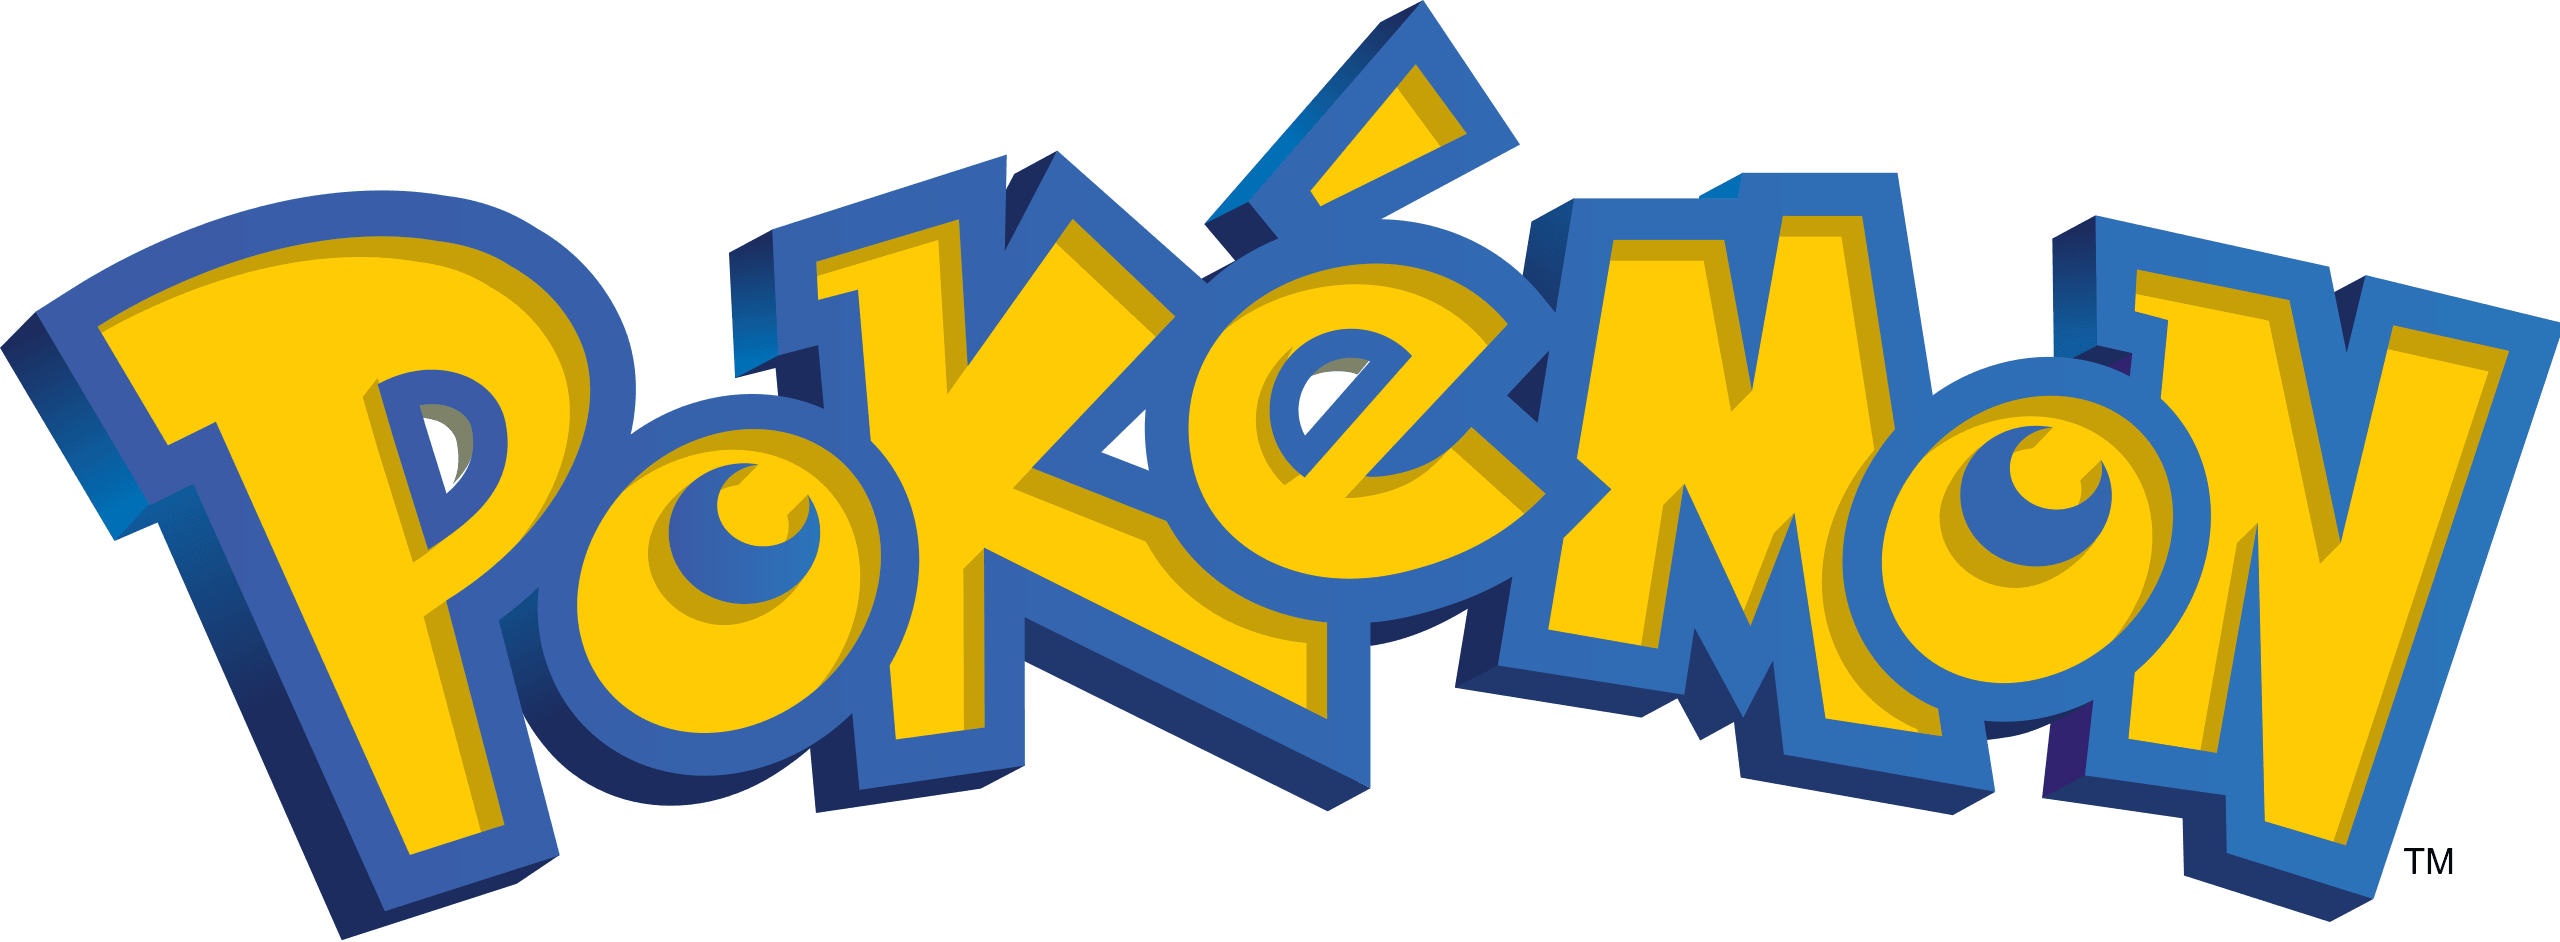 Pokemon Elite Trainer Box (ETB) - Scarlet & Violet - Paldea Evolved - Sprigatito, Fuecoco & Quaxly on Cover - Hobby Champion Inc